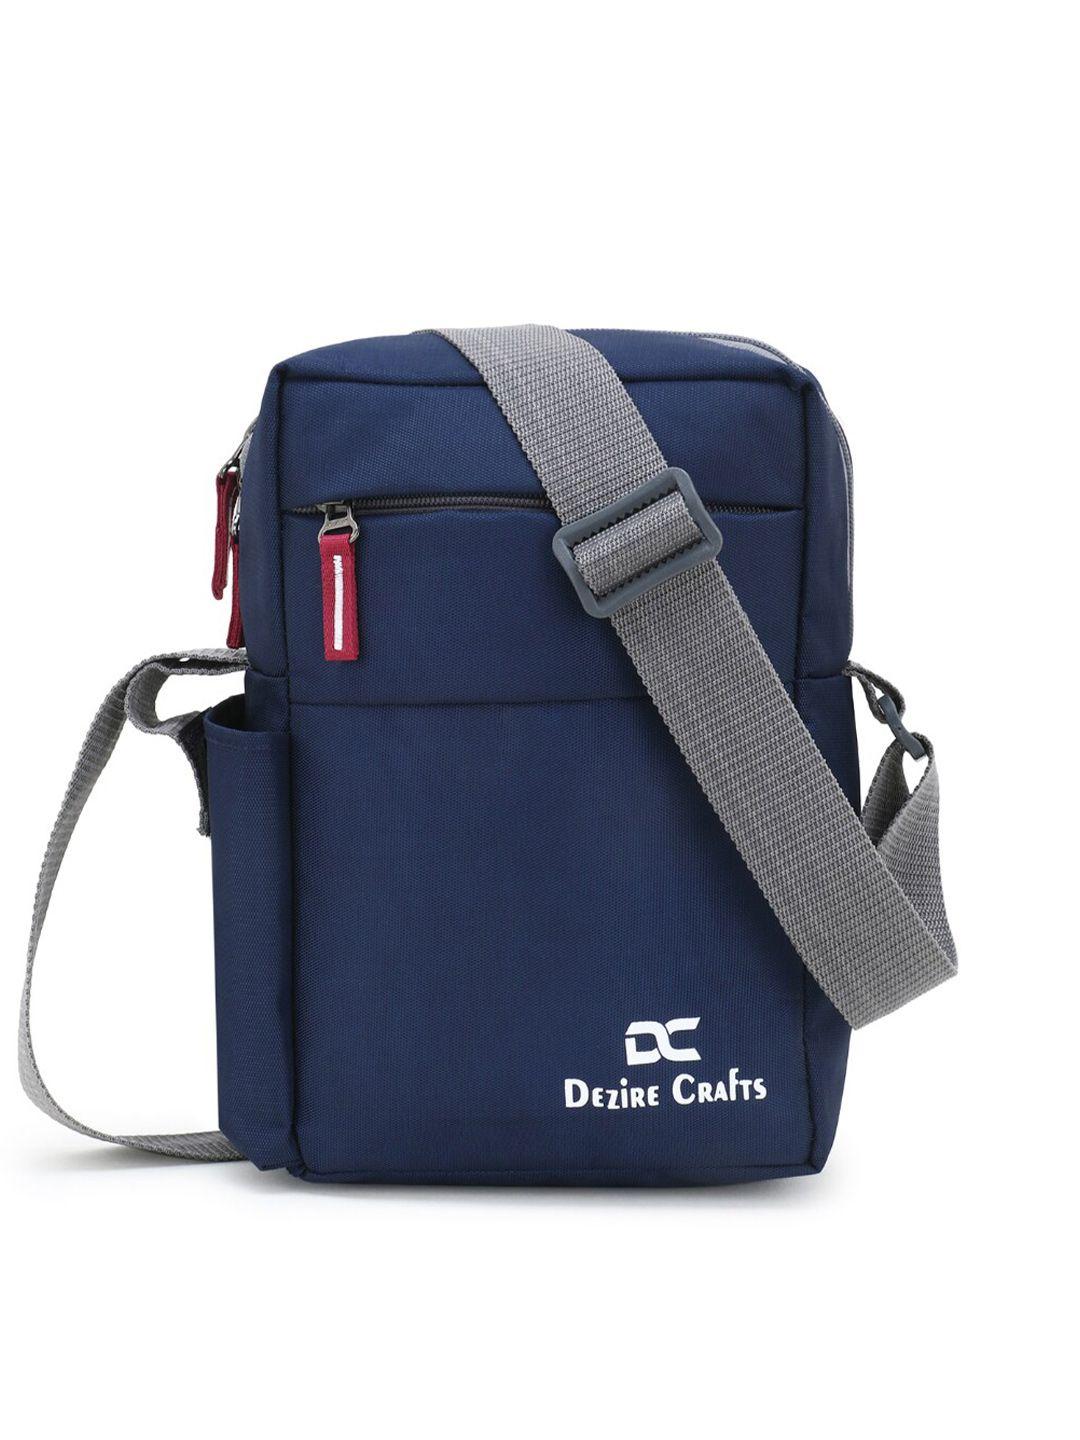 dezire crafts navy blue & grey cross body messenger bag